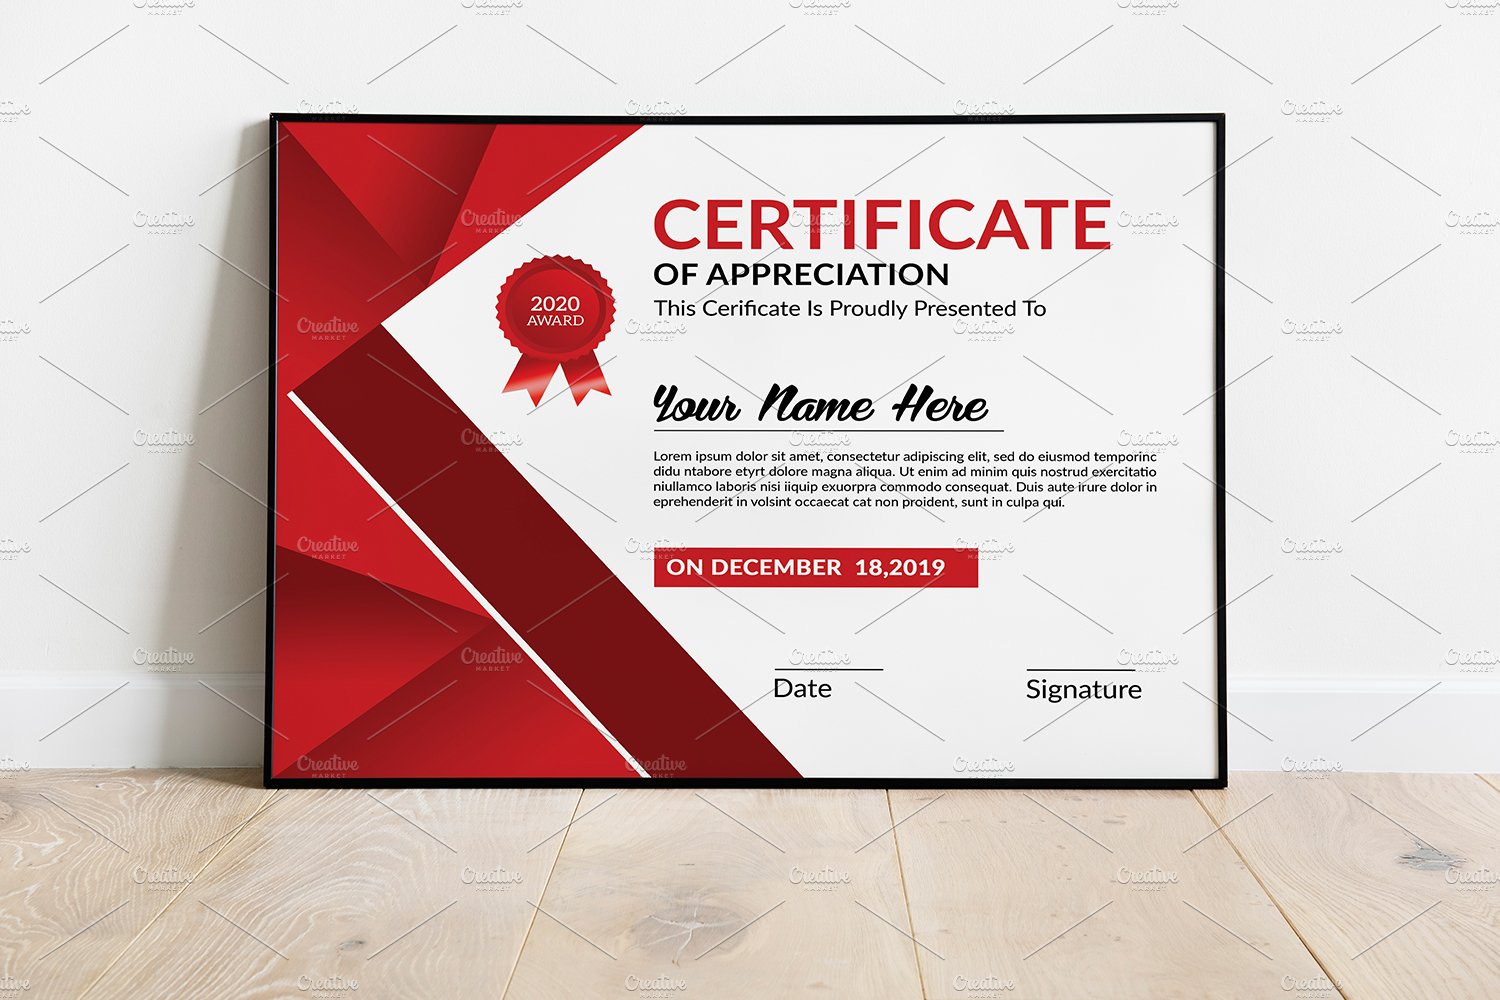 Printable Certificate V25 preview image.